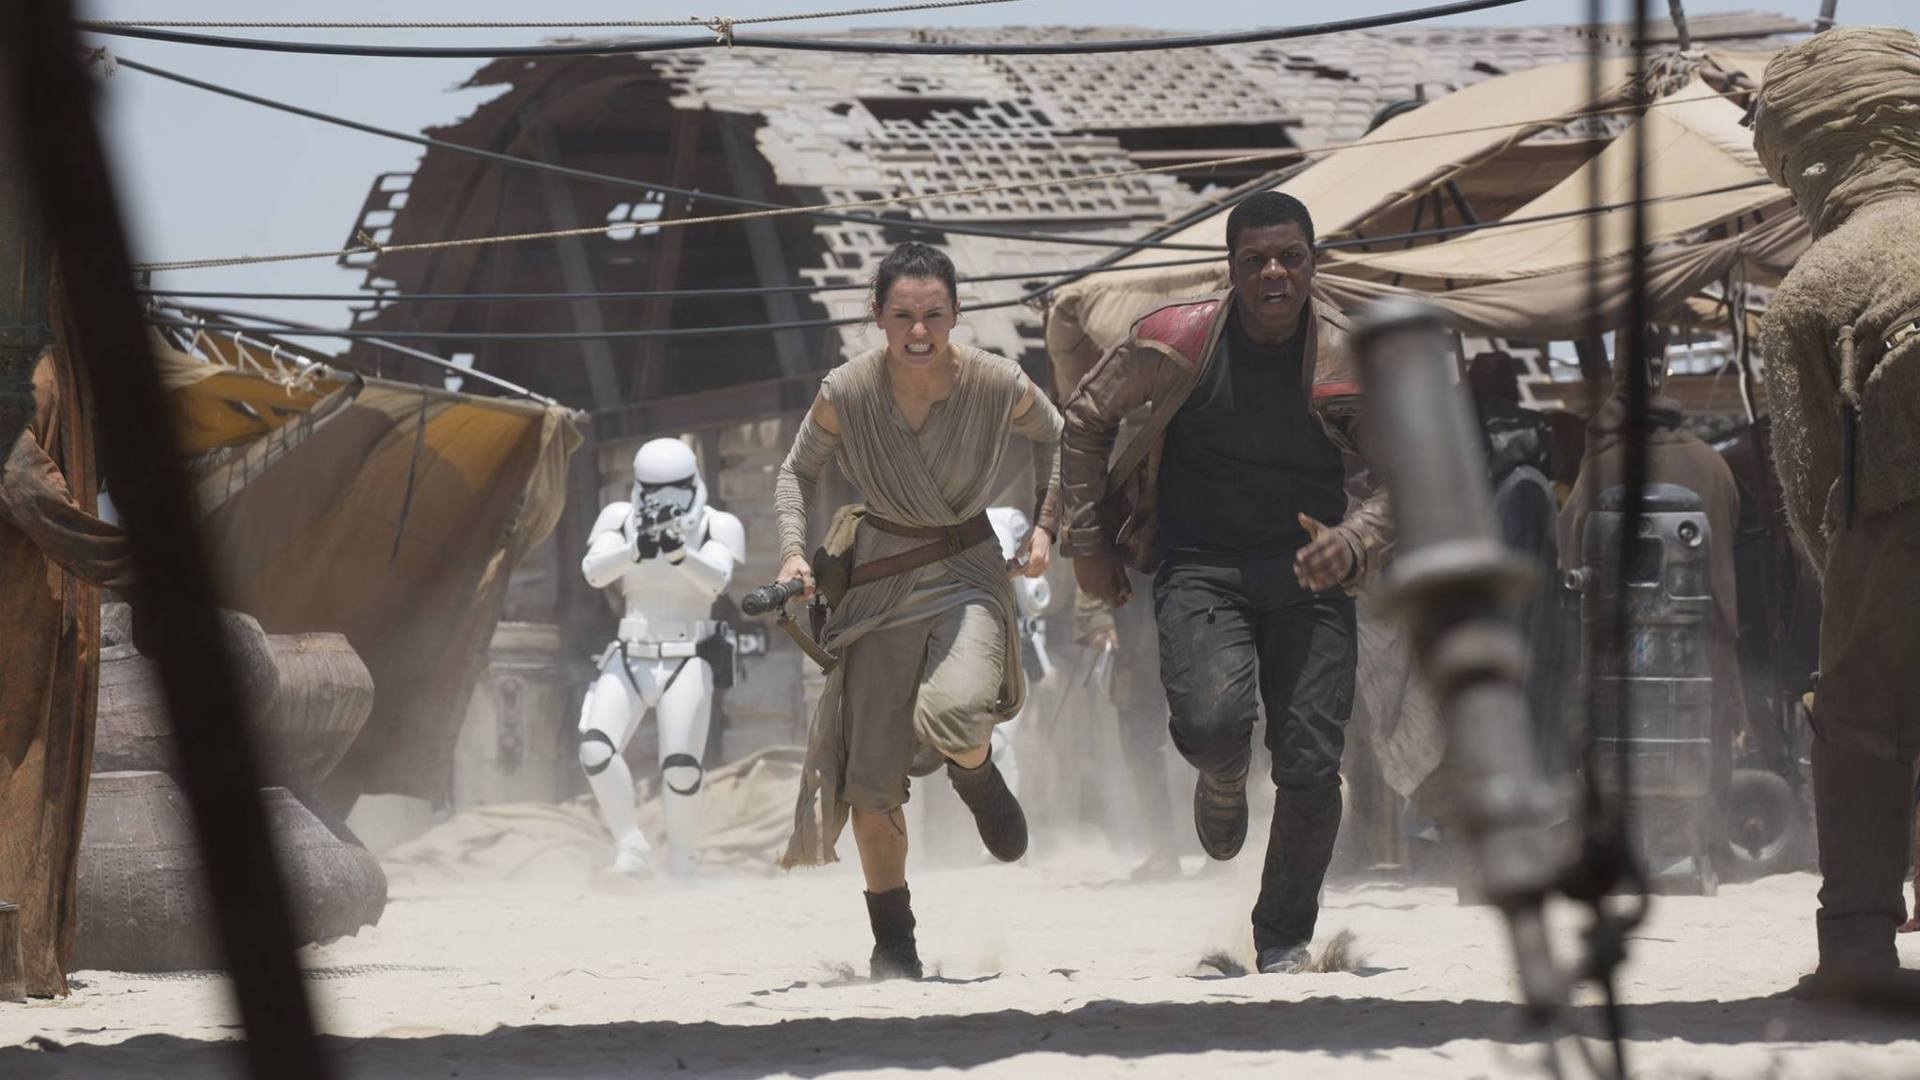 Star Wars The Force Awakens Movie Scene for 1920 x 1080 HDTV 1080p resolution